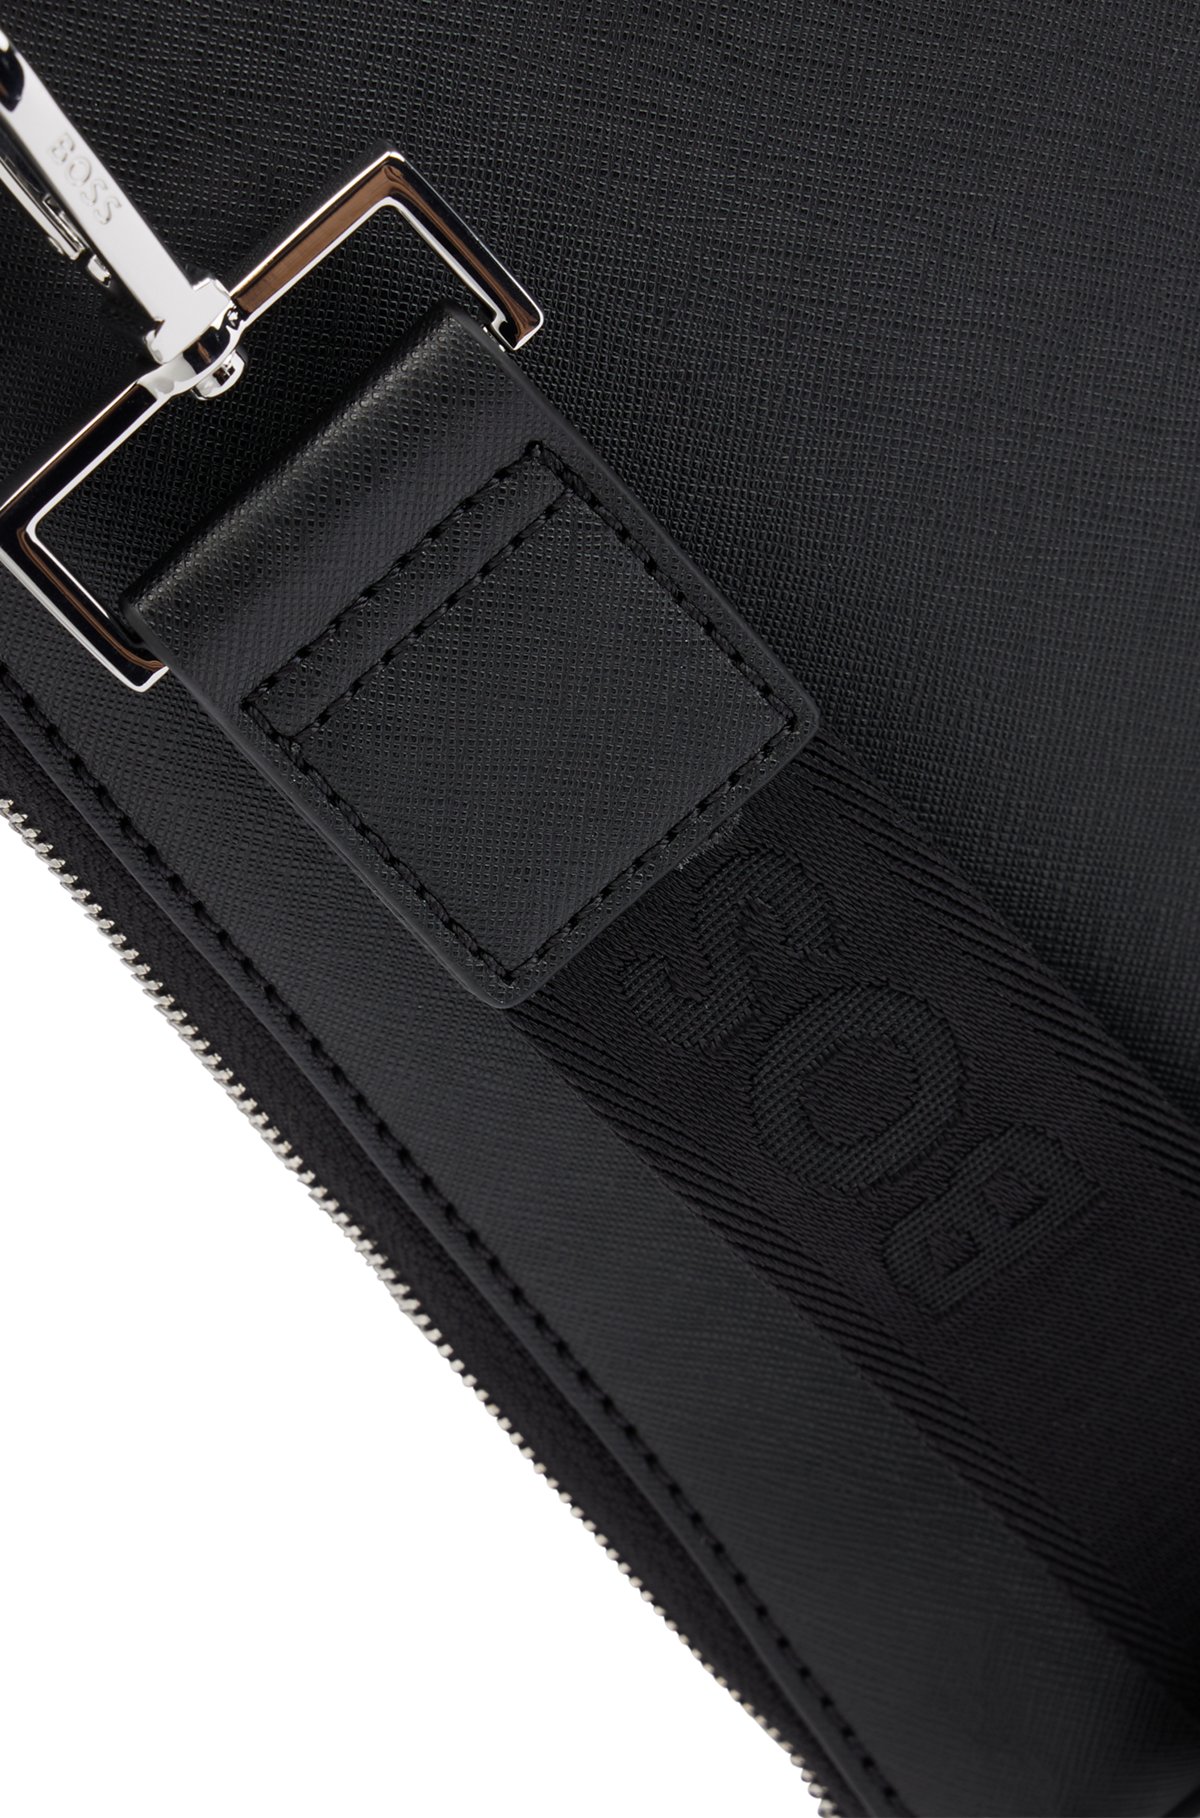 Slimline document case with detachable branded strap, Black